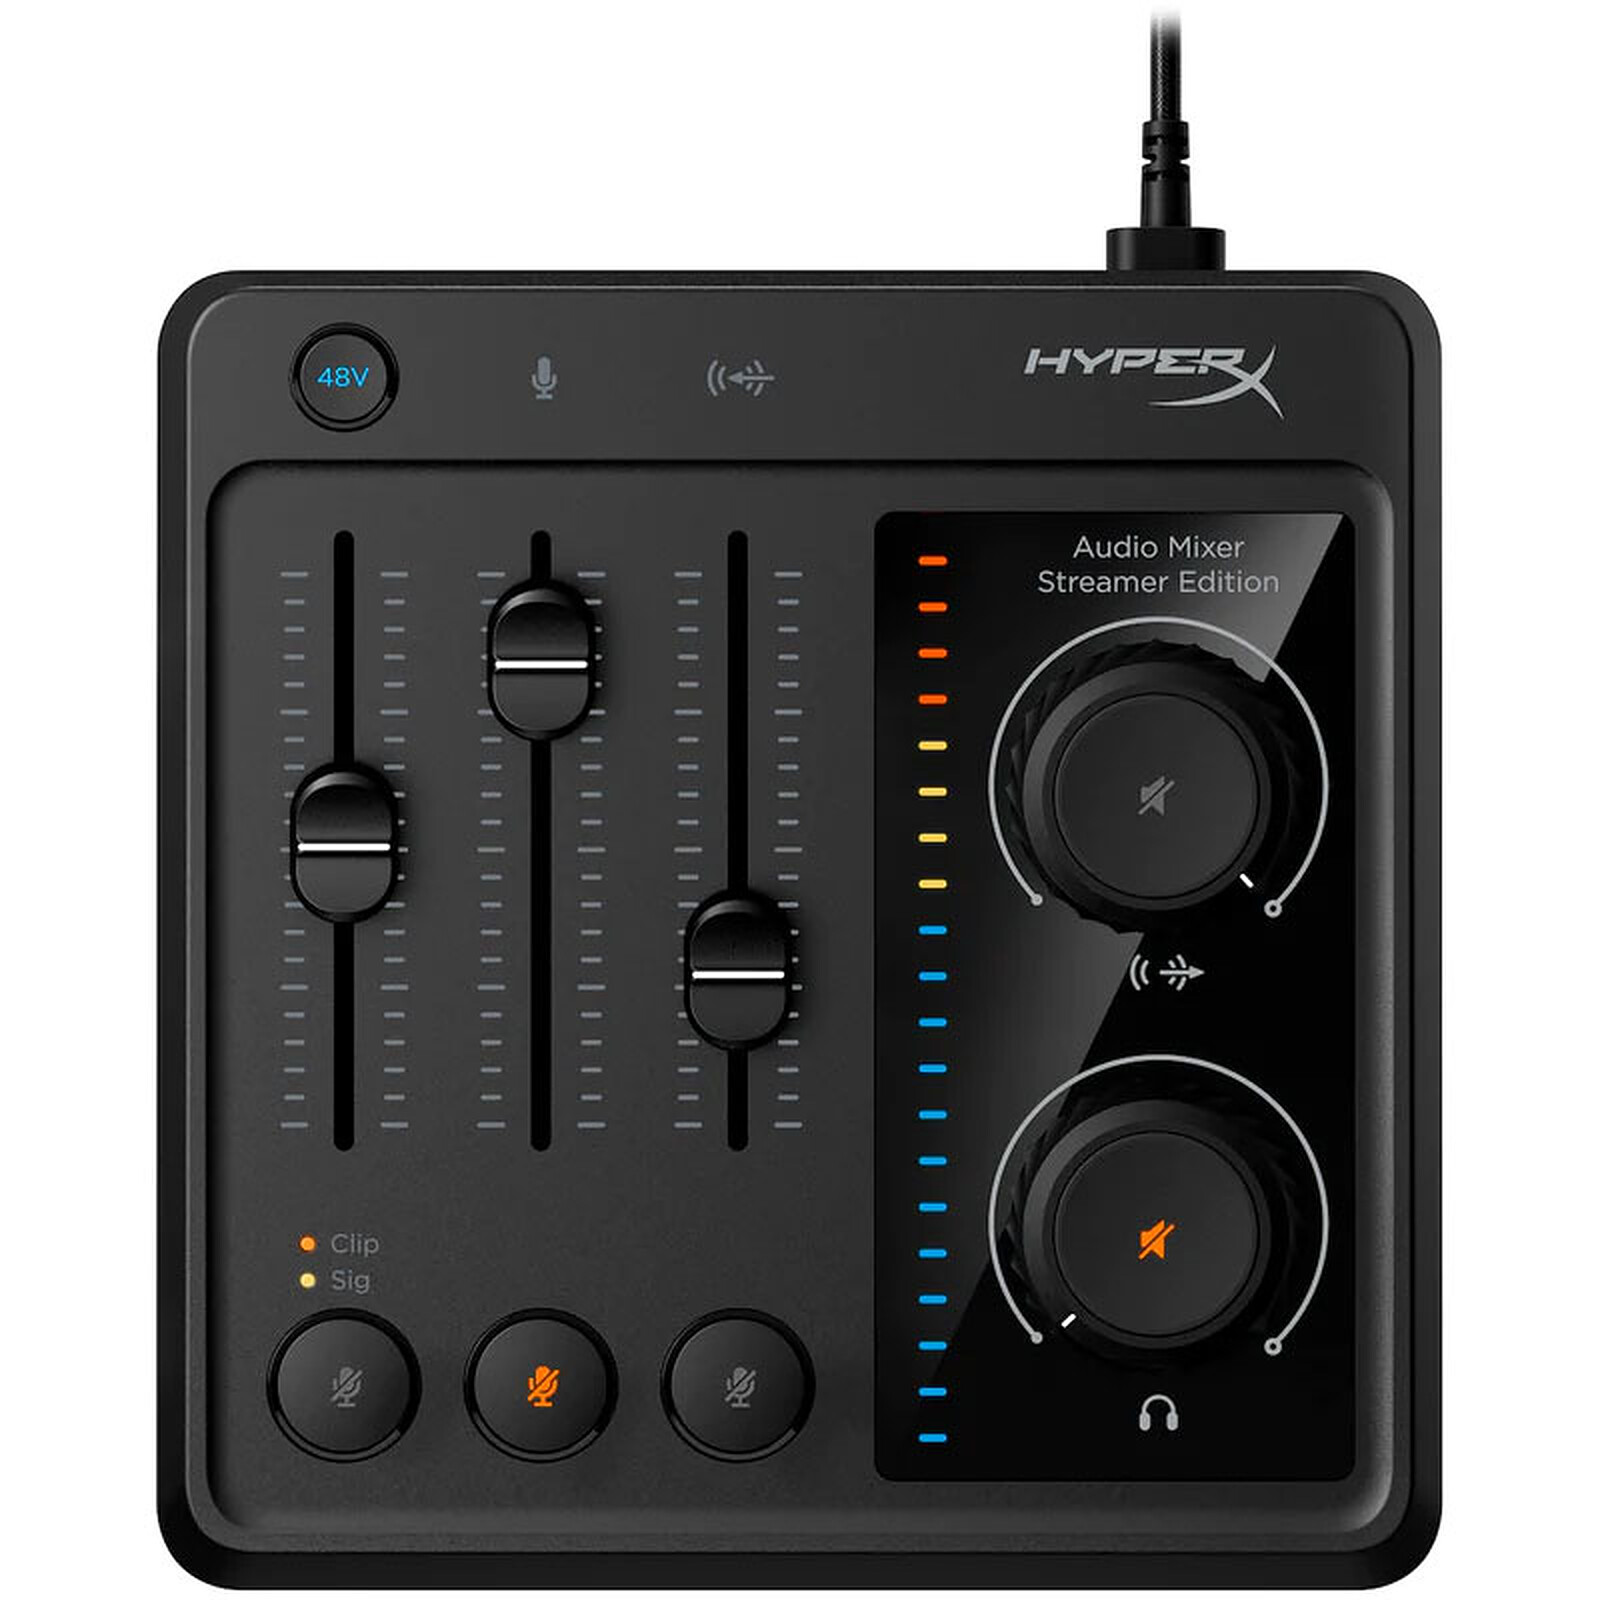 Mezclador de audio HyperX - Accesorios Streaming - LDLC